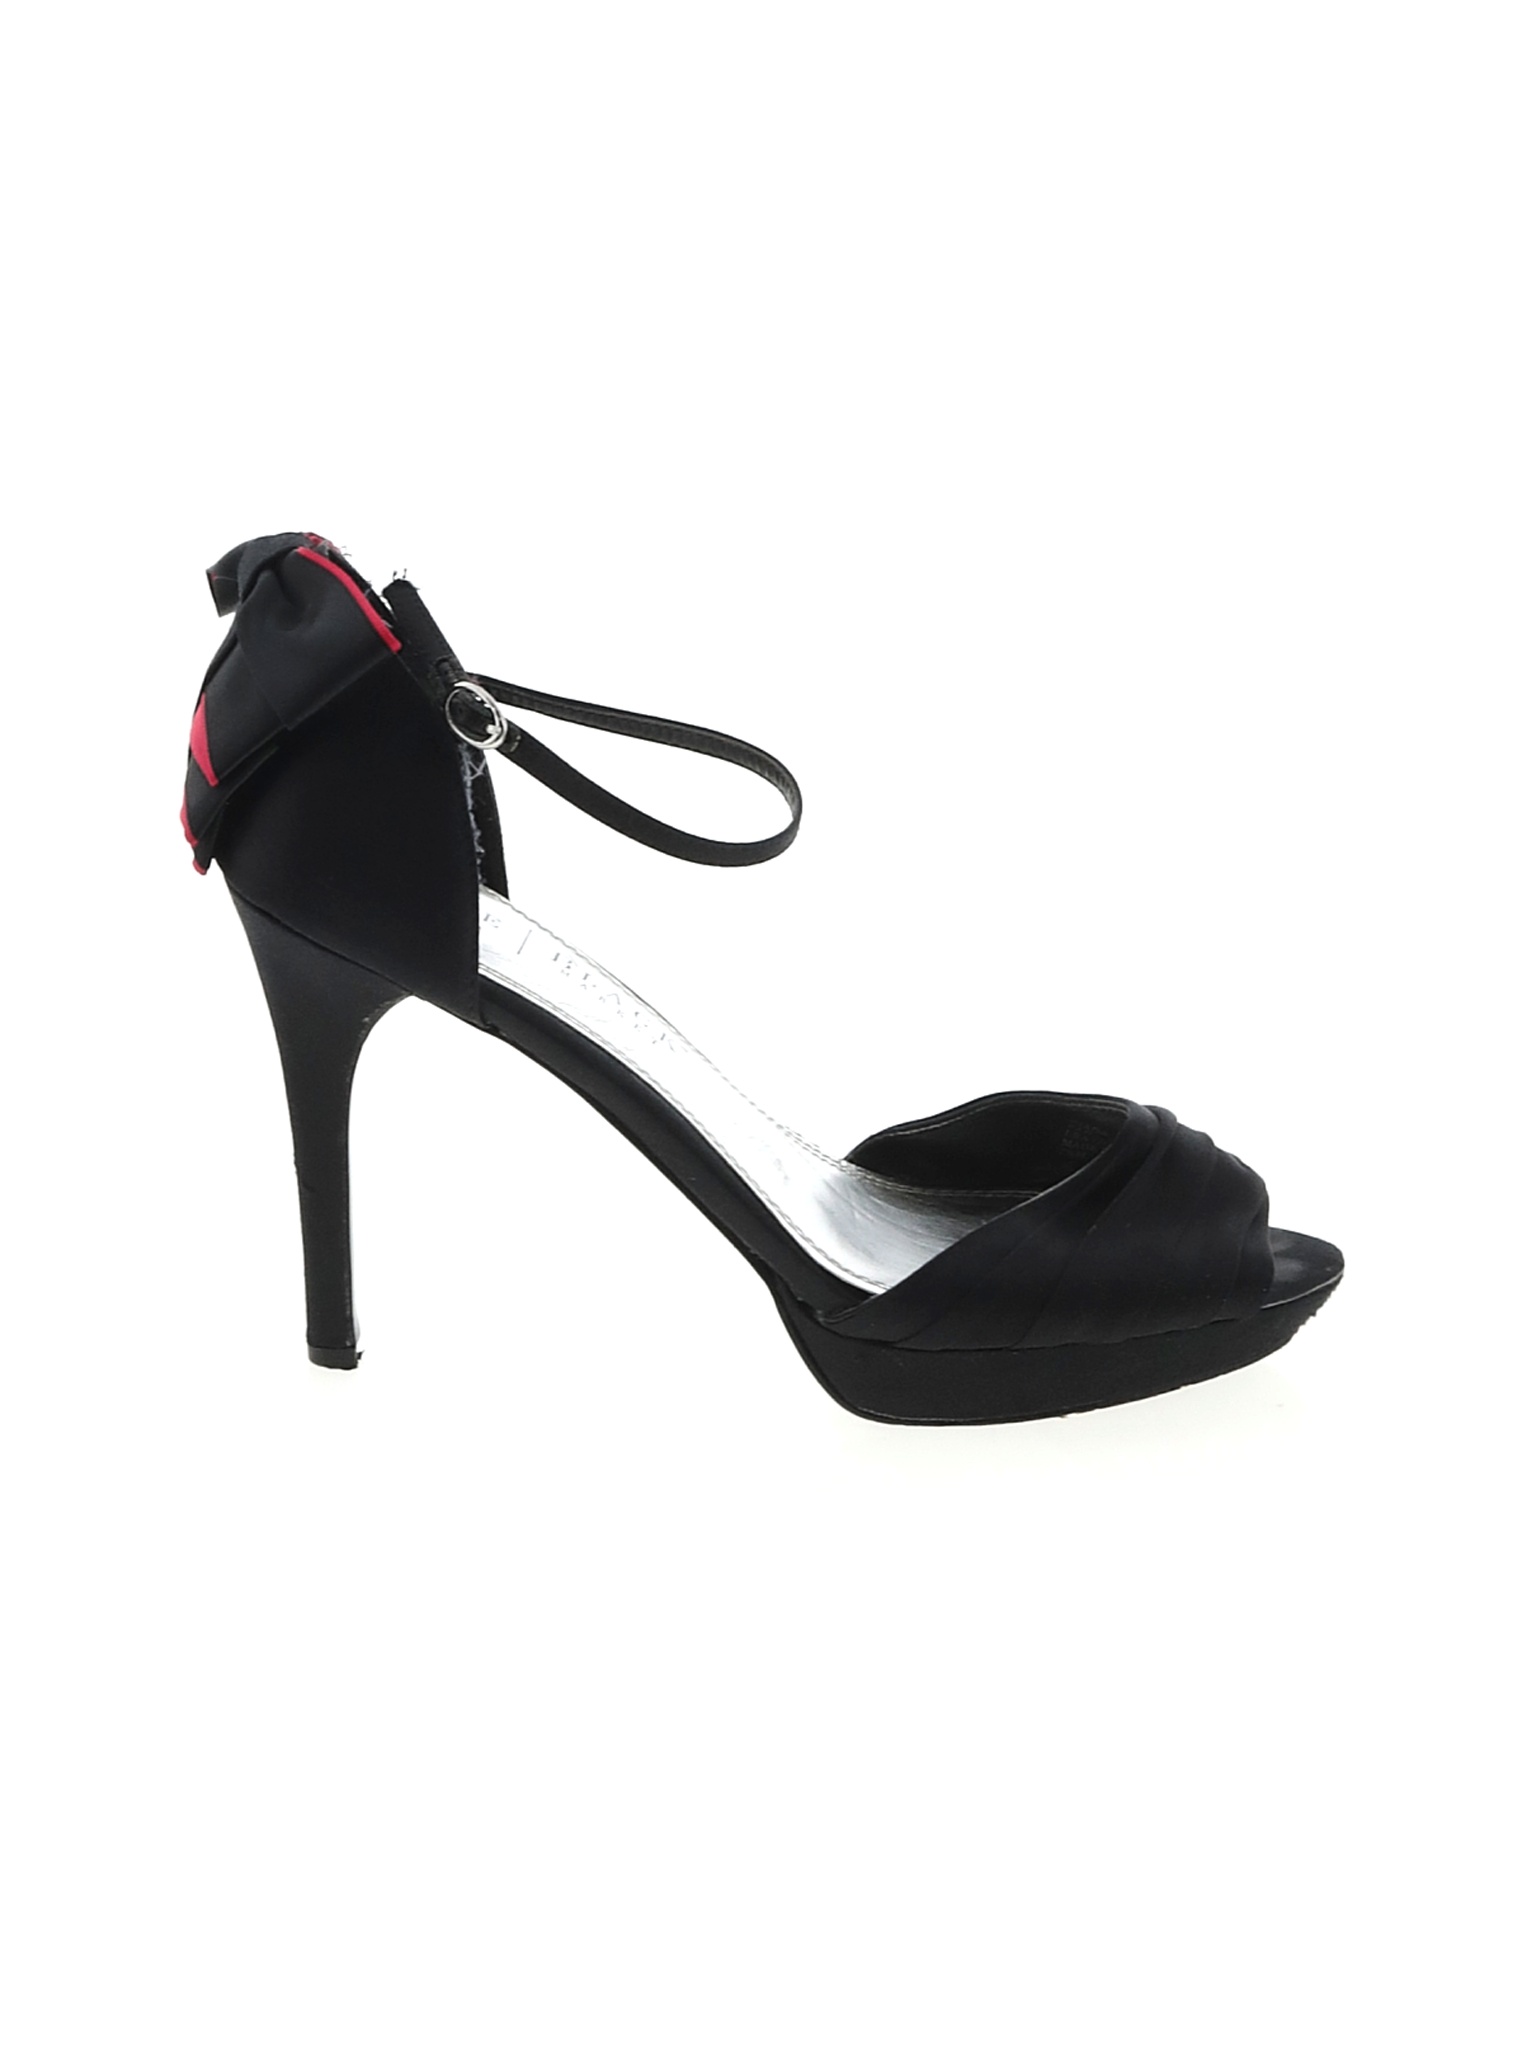 White House Black Market Women Black Heels US 7.5 | eBay